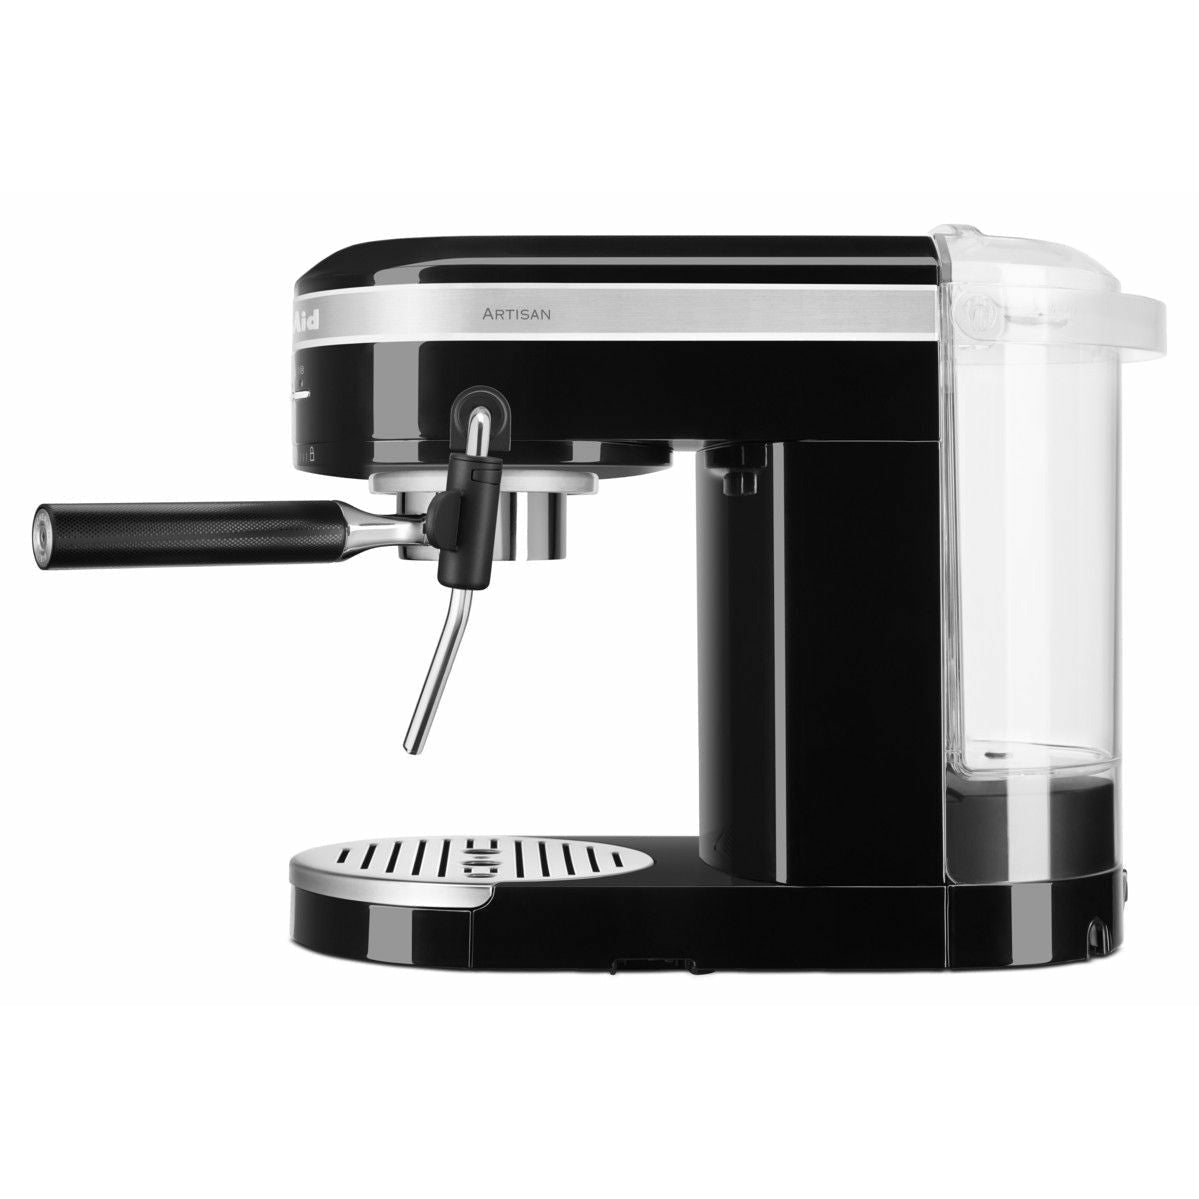 KitchenAid 5KES6503 Artisan Espresso Machine, gjutjärnsvart